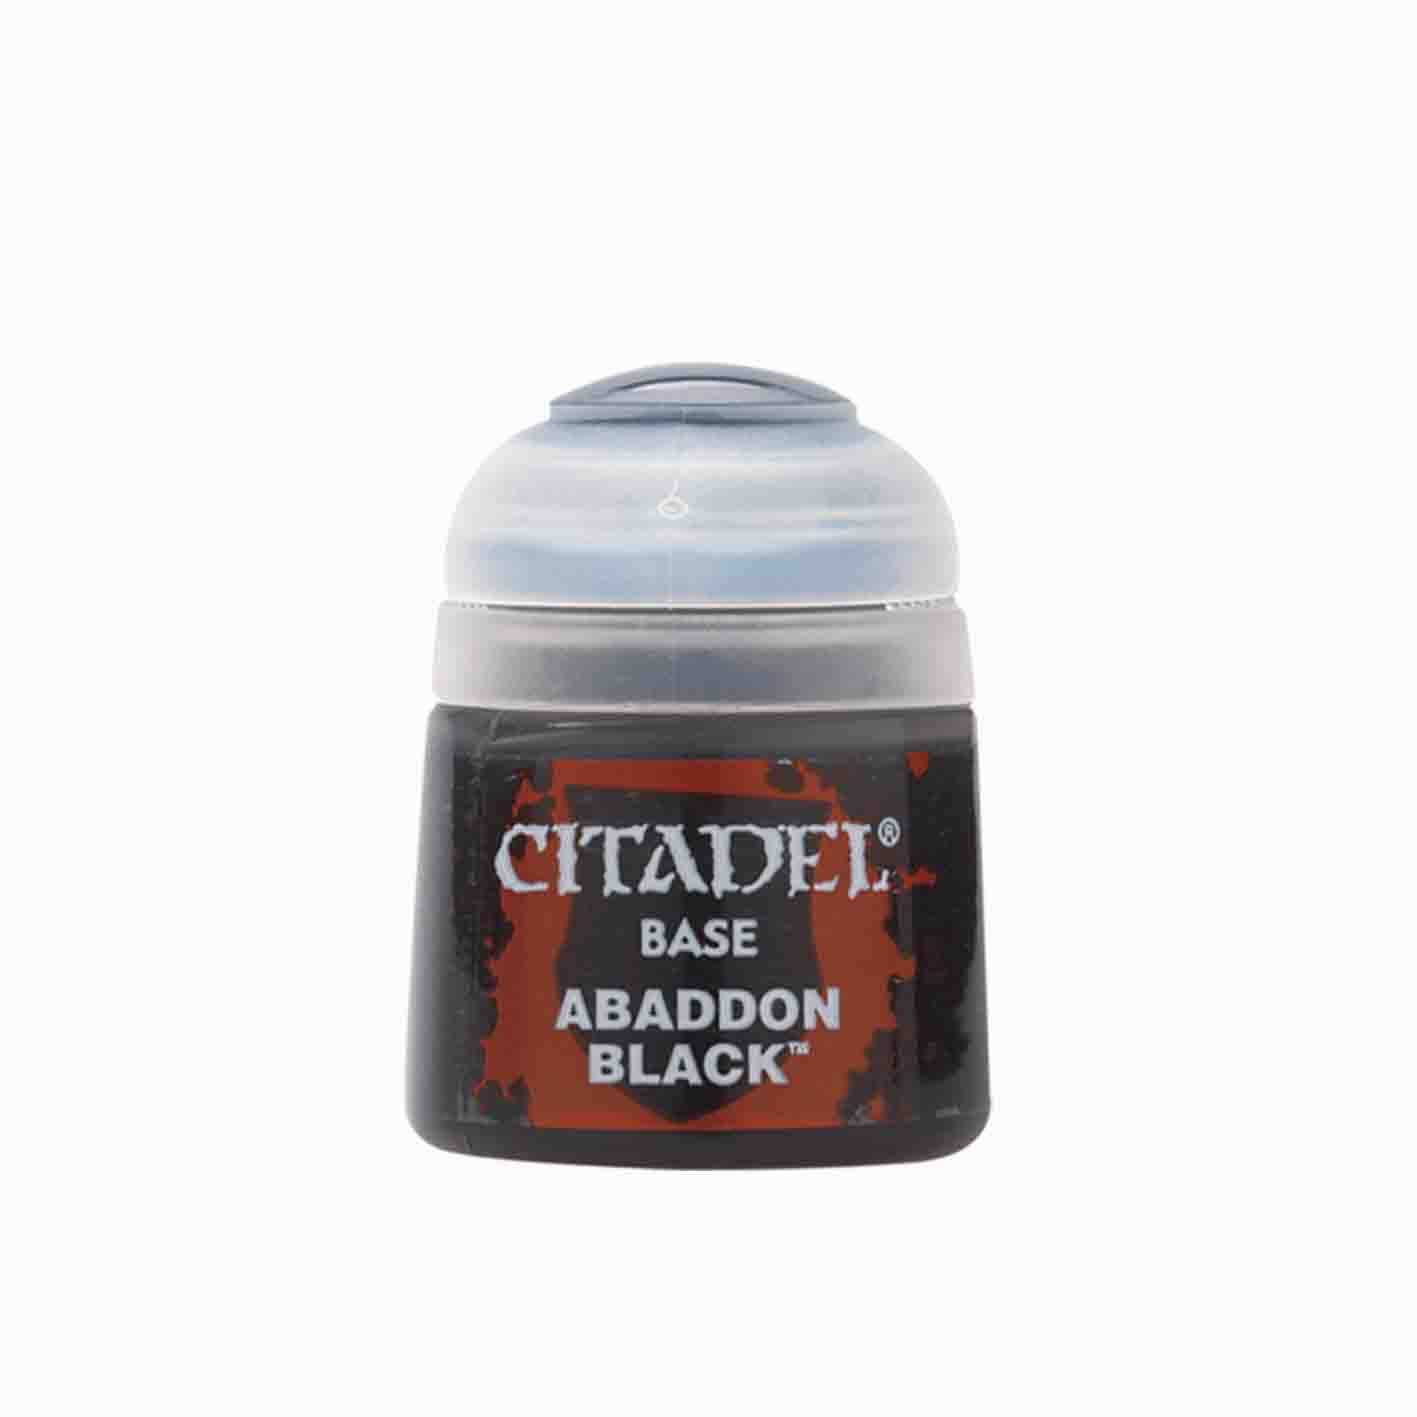 Colore Citadel Base nero Abaddon Black da 12ml per pittura miniature  Warhammer opaco e uniforme